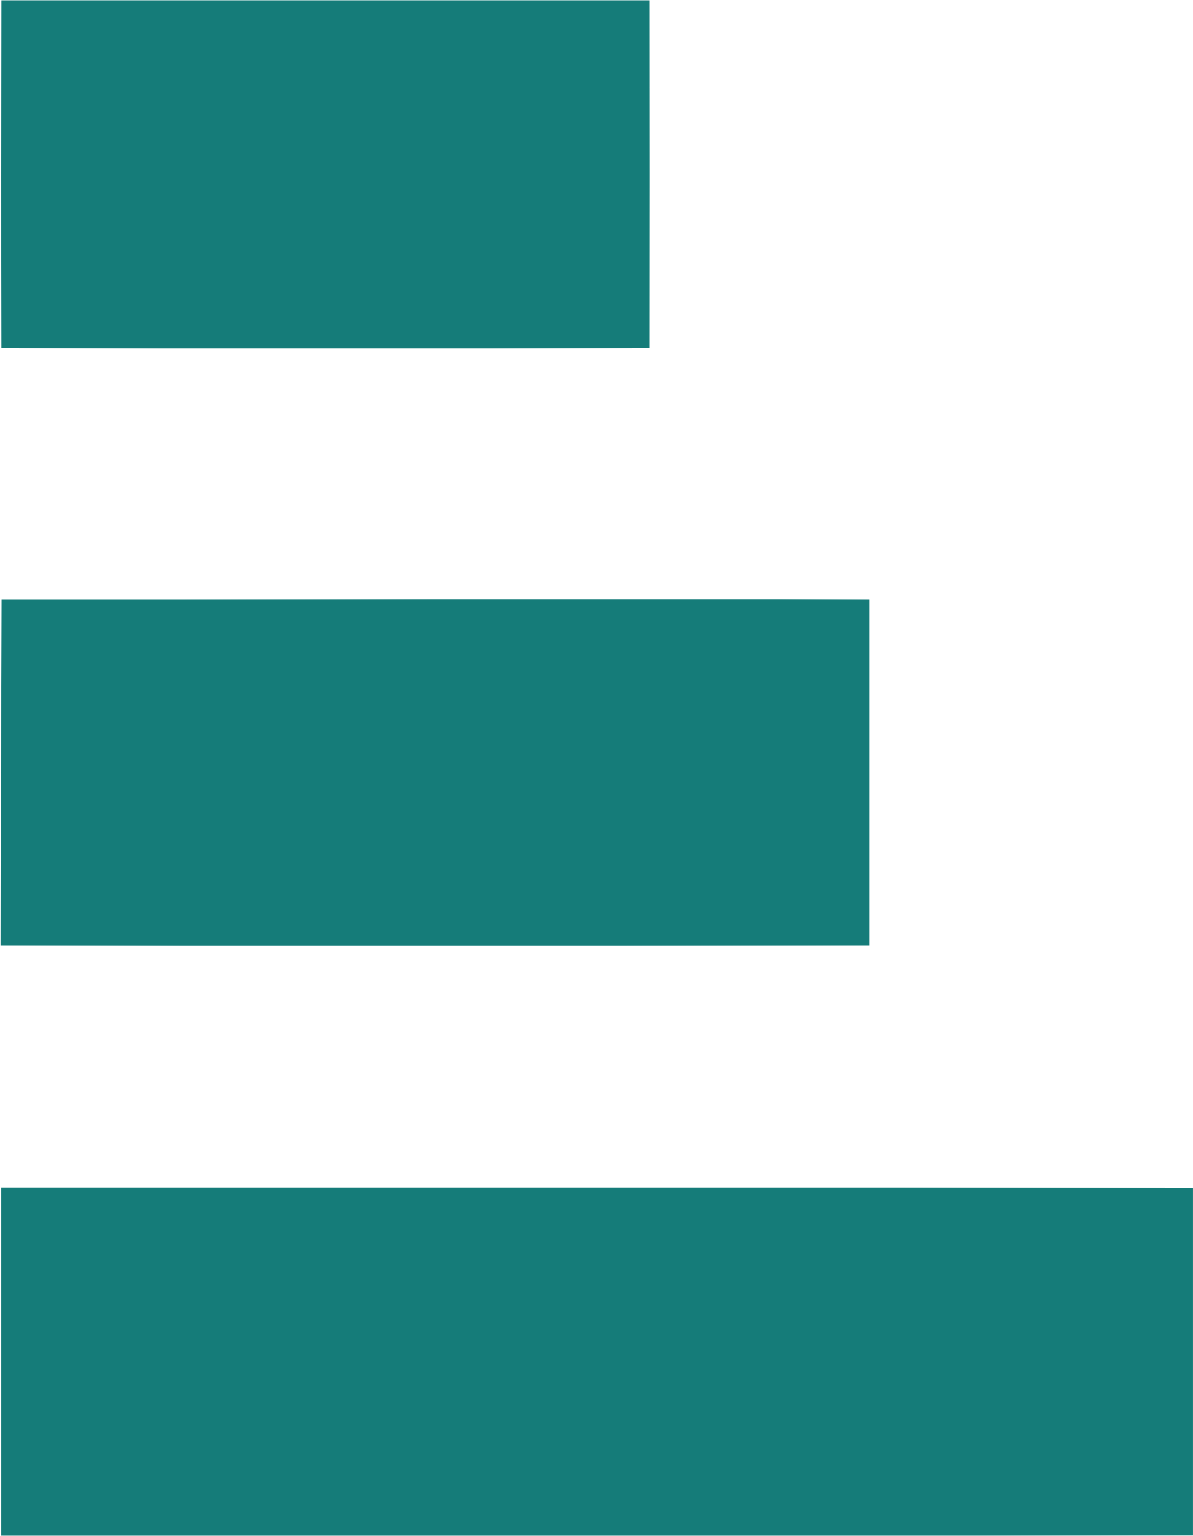 Emerge ETF Trust logo (transparent PNG)